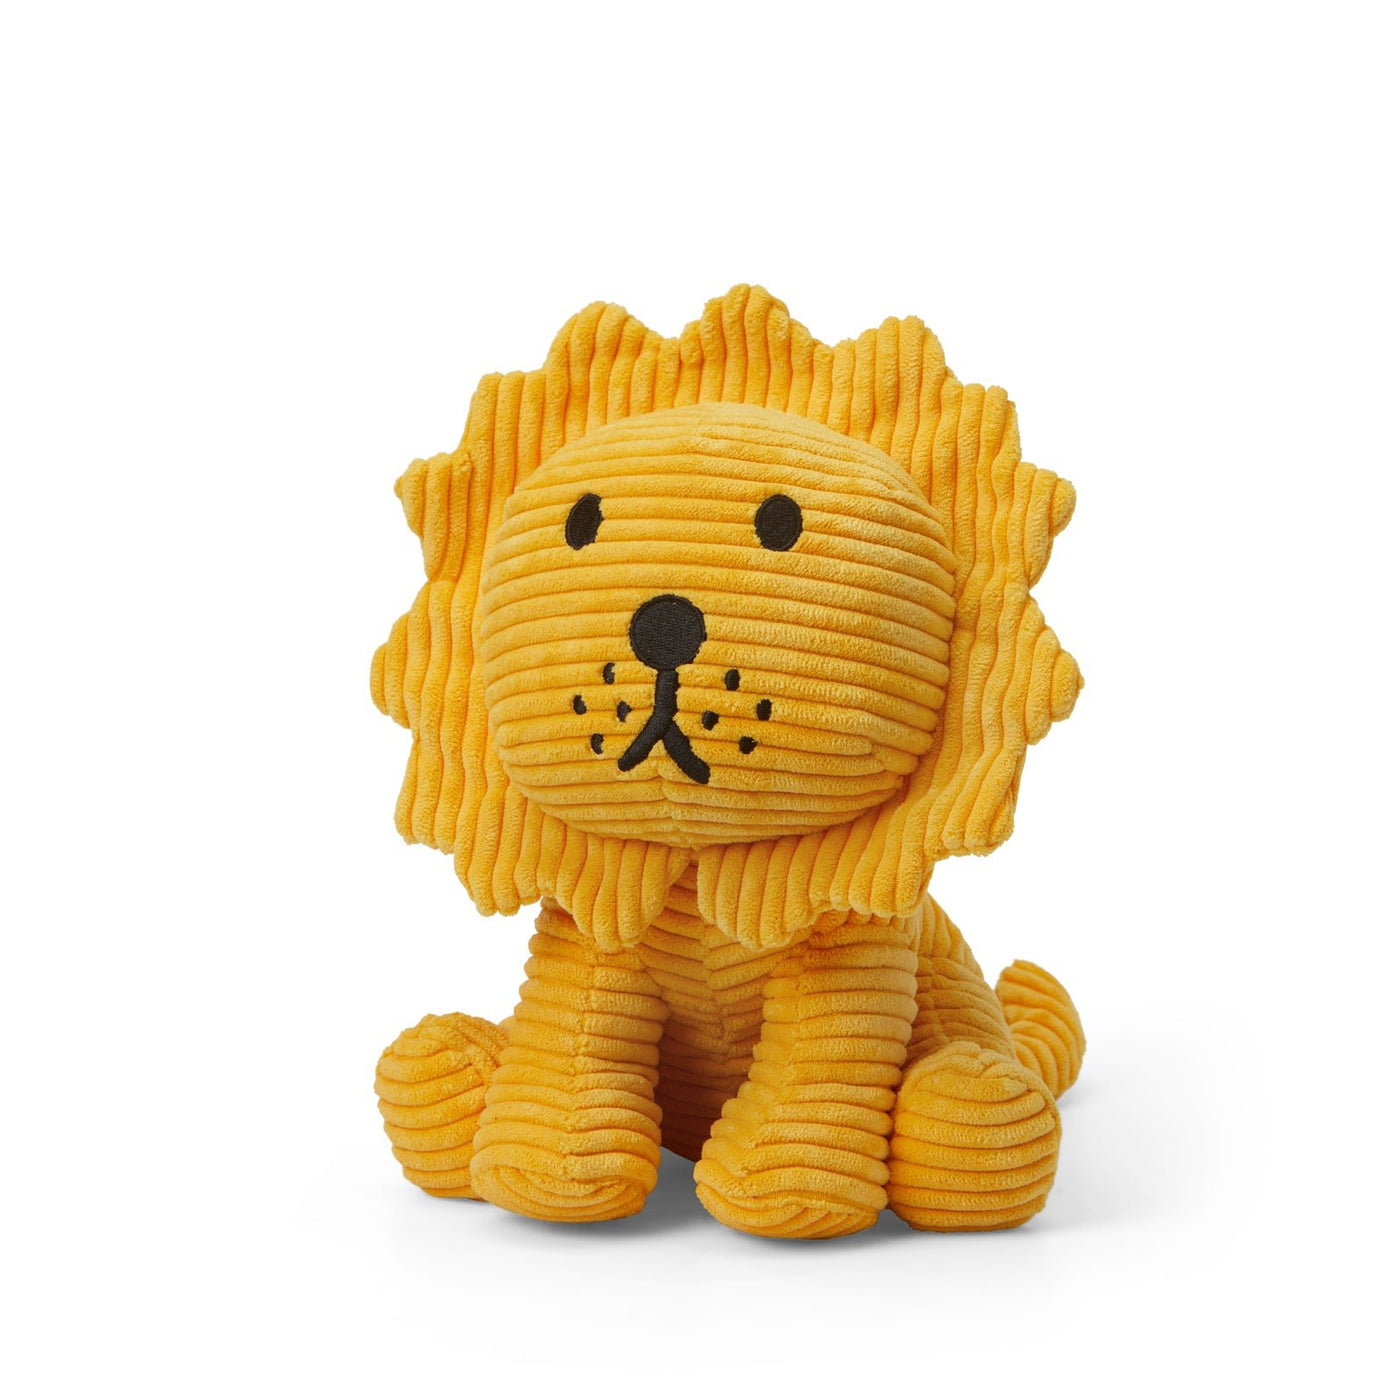 Bon Ton Toys Lion/Löwe Curduroy/Cord in Yellow/Gelb wahlweise klein ca. 17cm & groß 24cm - Bitangel RENOVATE & FURNISH HOMES GmbH